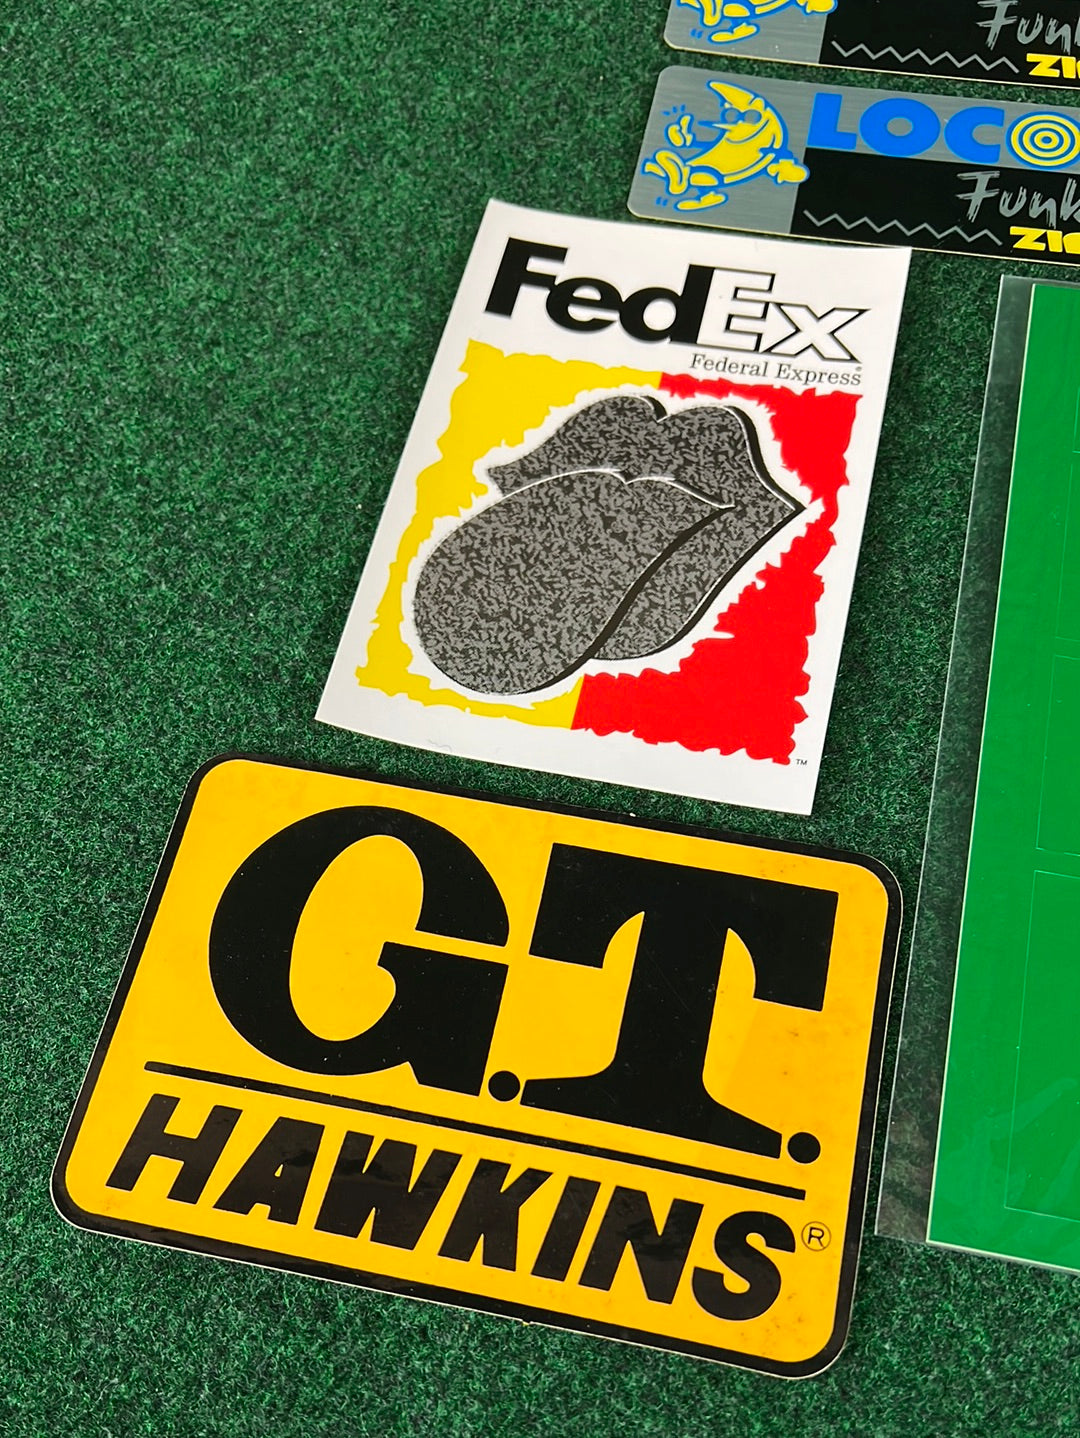 BP, FedEx, G.T. Hawkins, LocoBanana Sticker Set